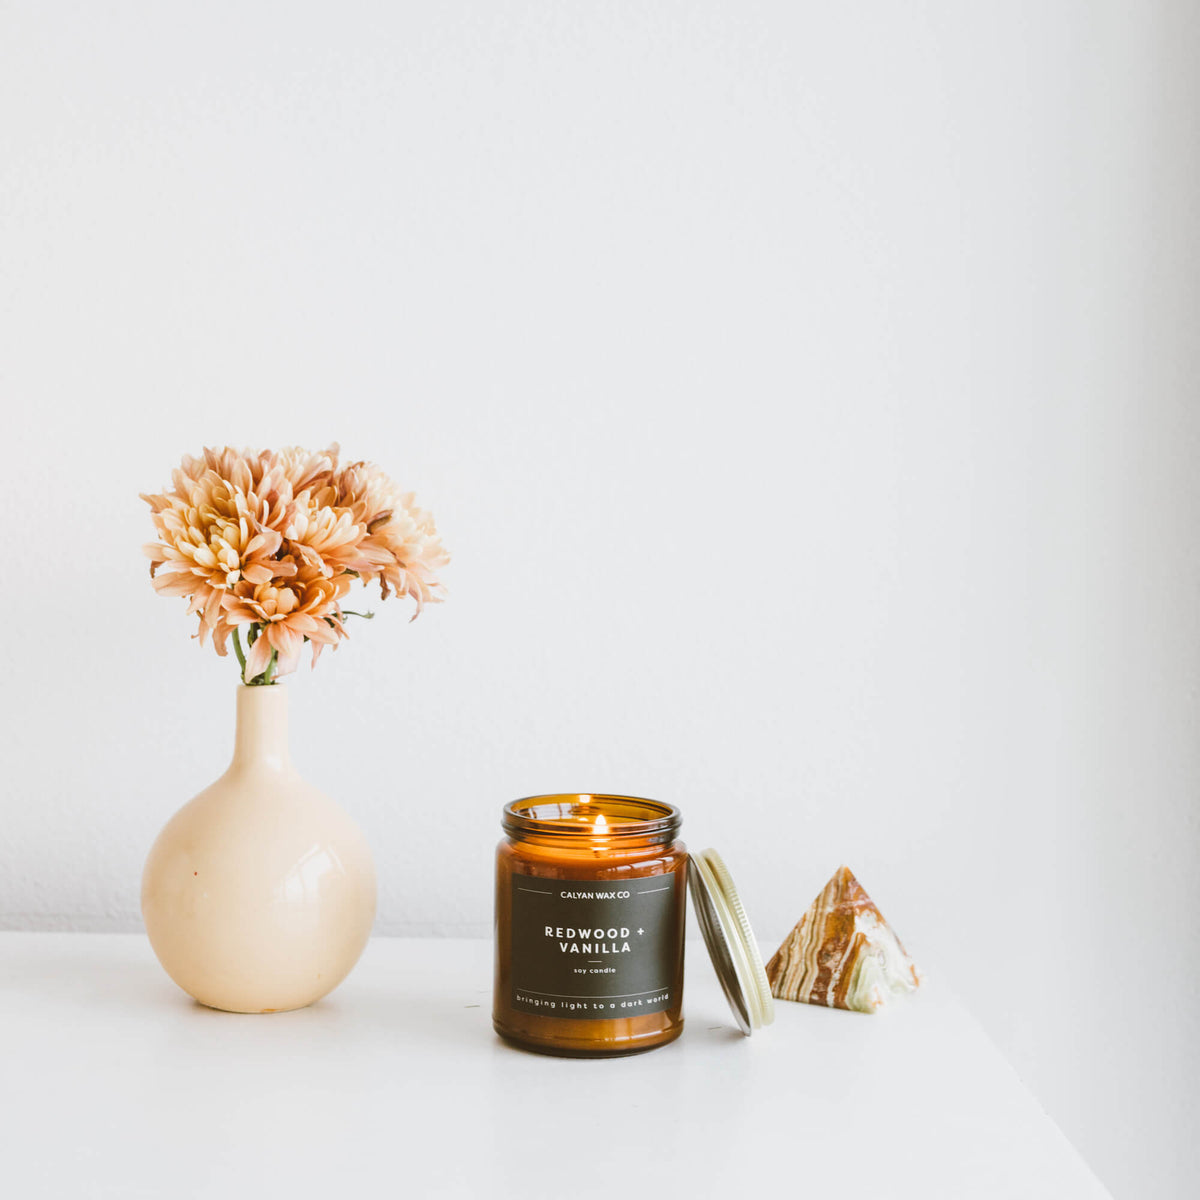 7.2 Oz. Redwood + Vanilla Soy Candle in an Amber Jar - Calyan Wax Co.